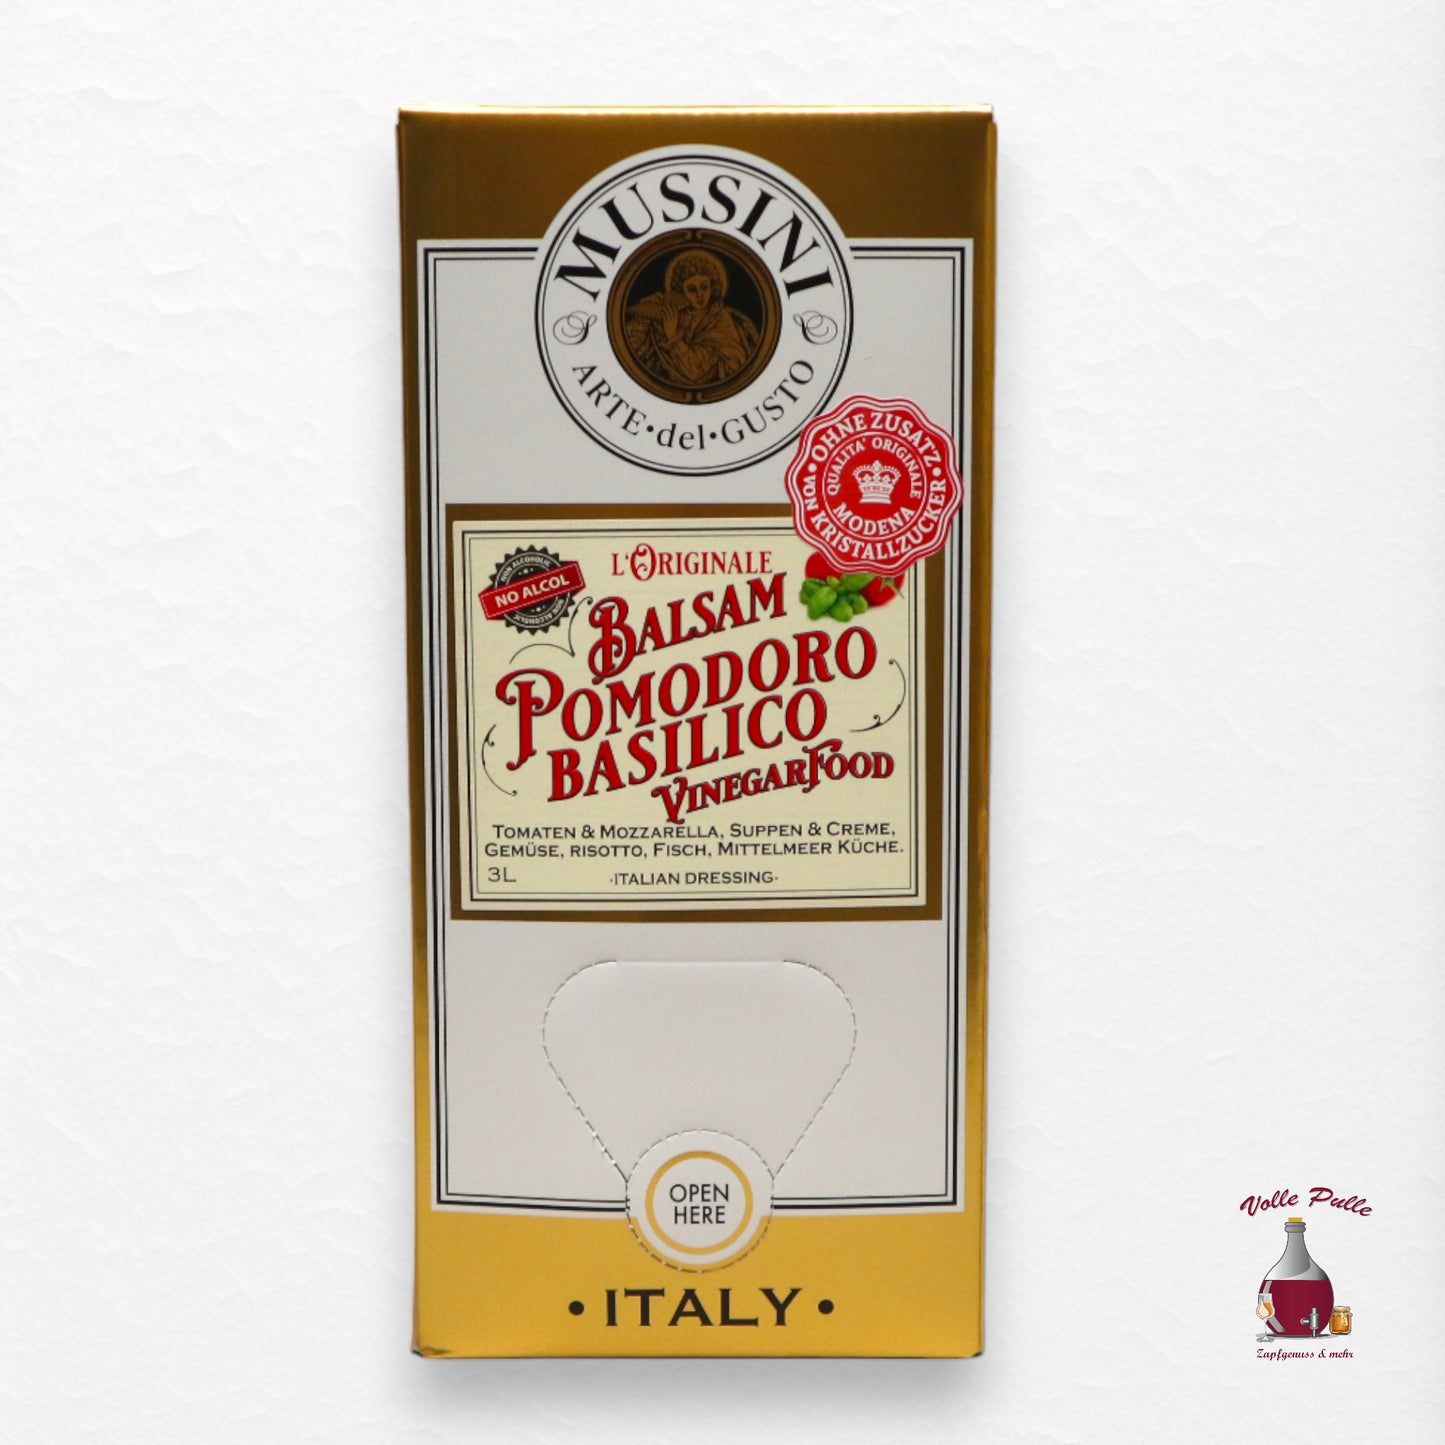 Balsam Pomodoro Basilico - Vinegar Food